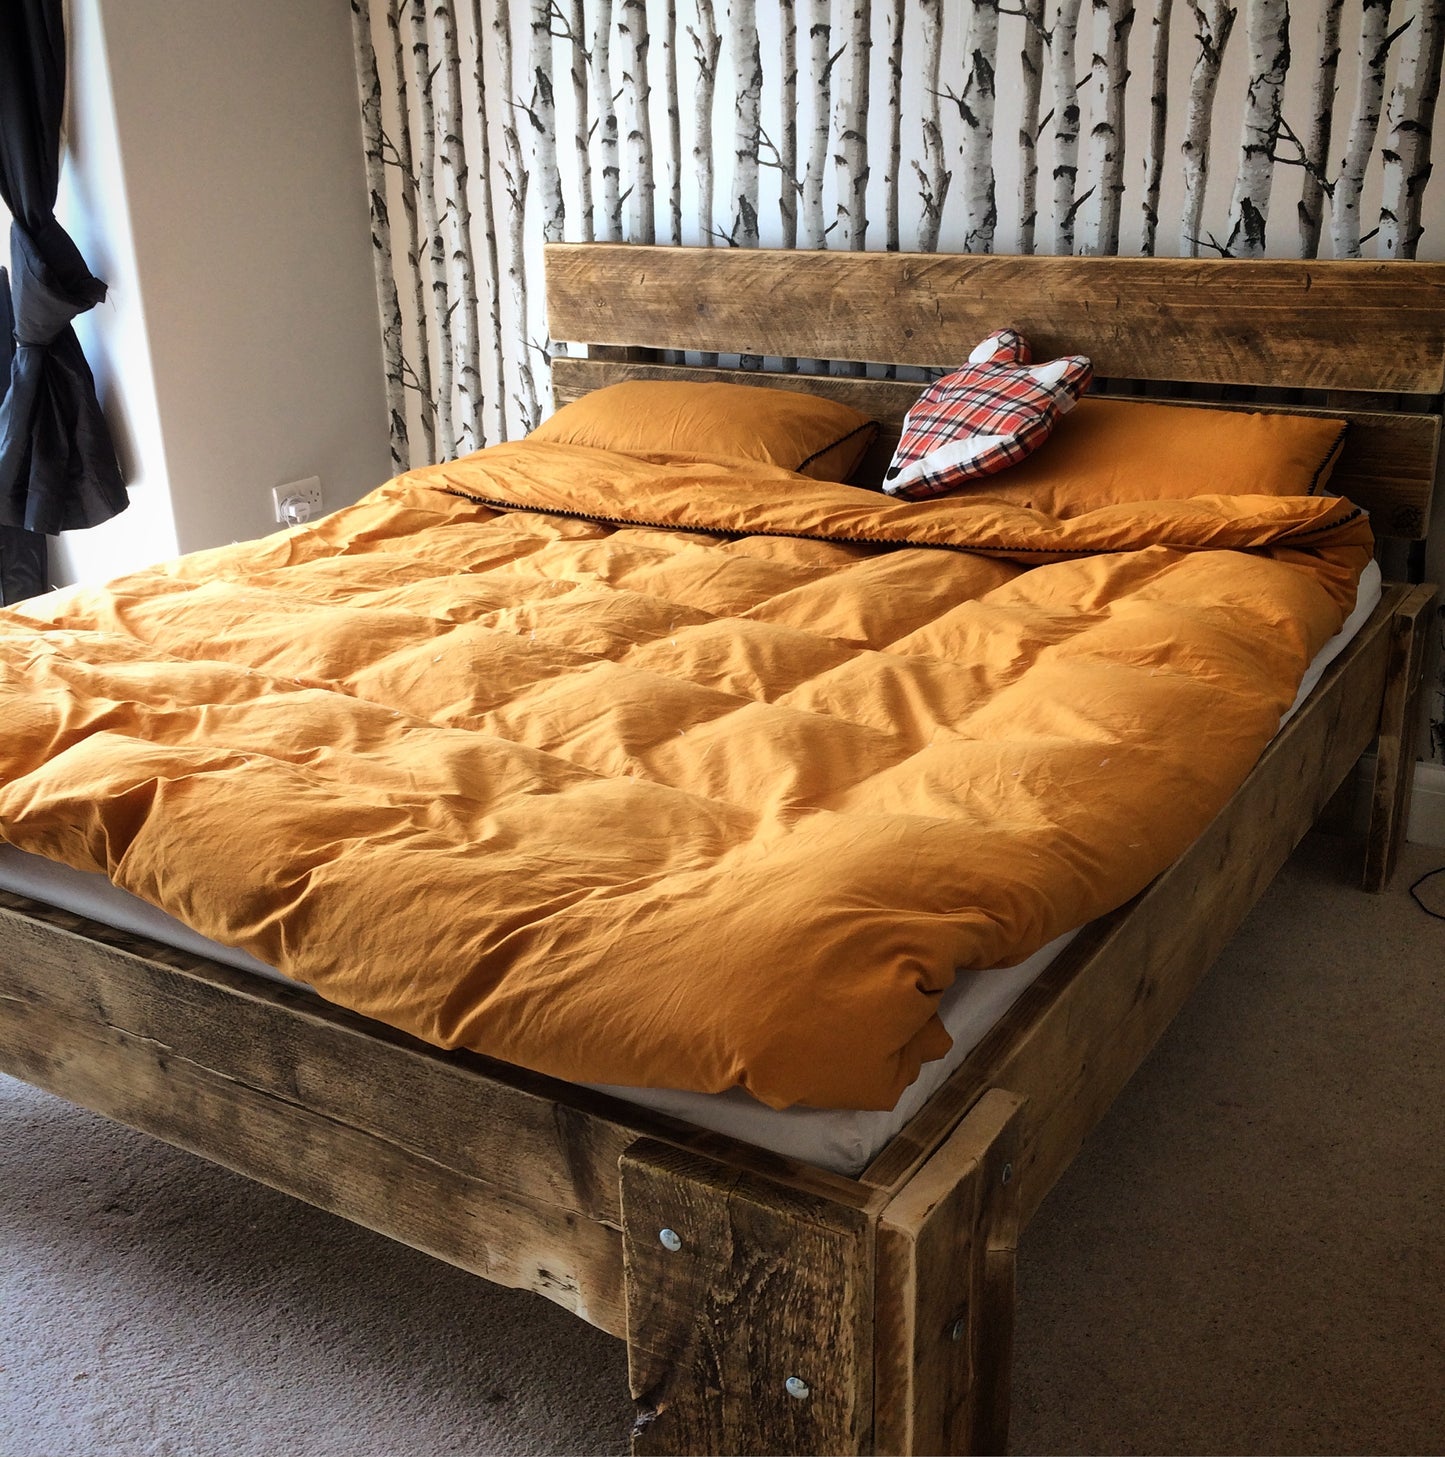 Reclaimed wood rustic Bed